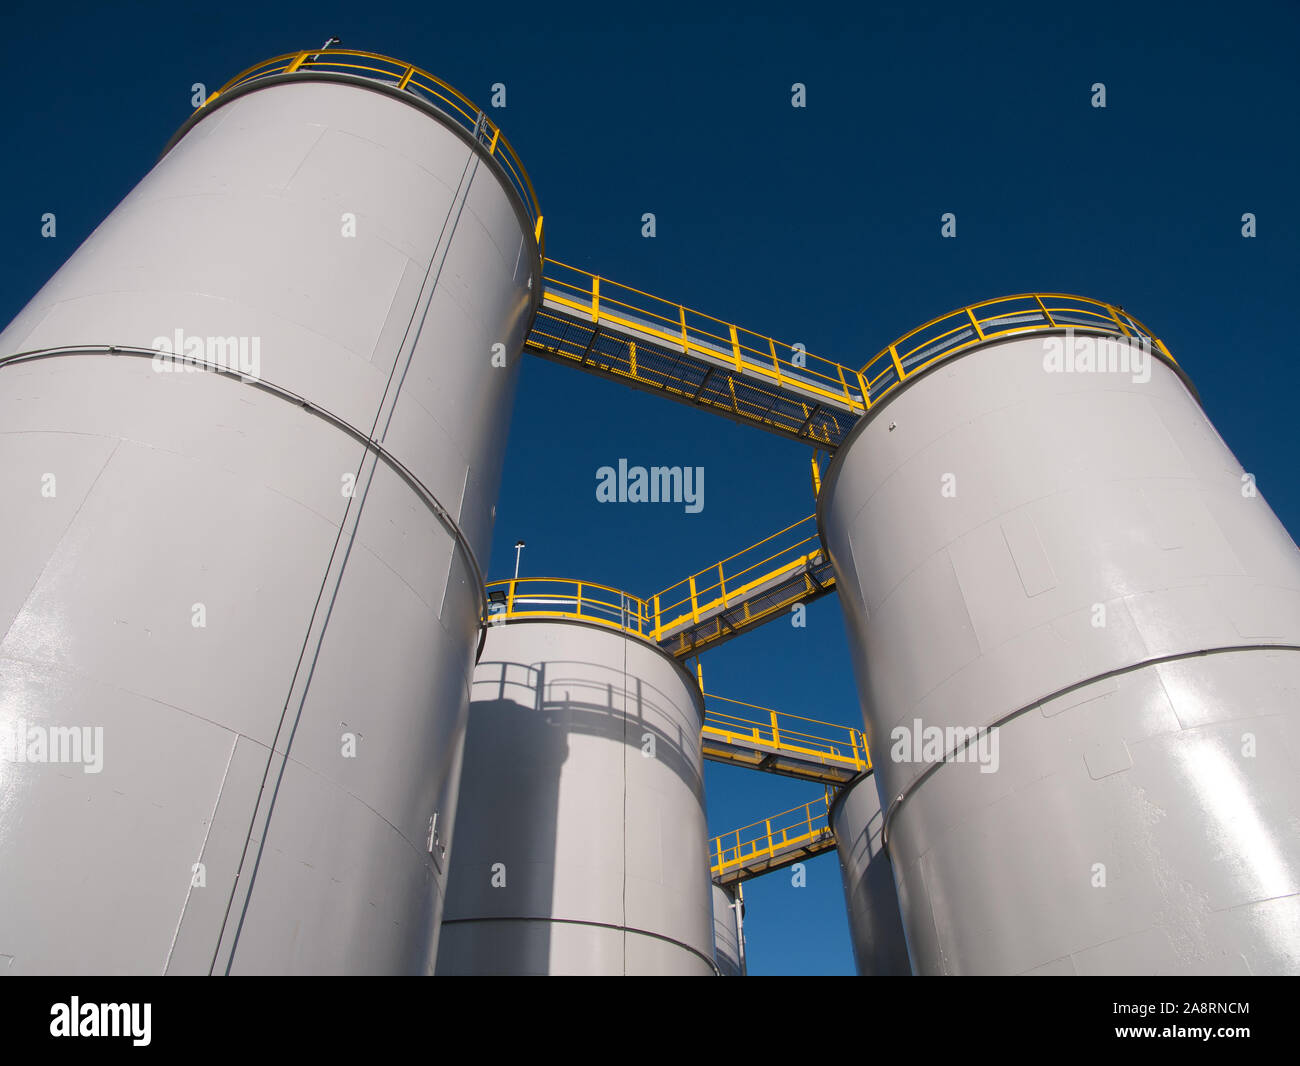 Oil storage tanks / silos against a clear blue sky. Stock Photo